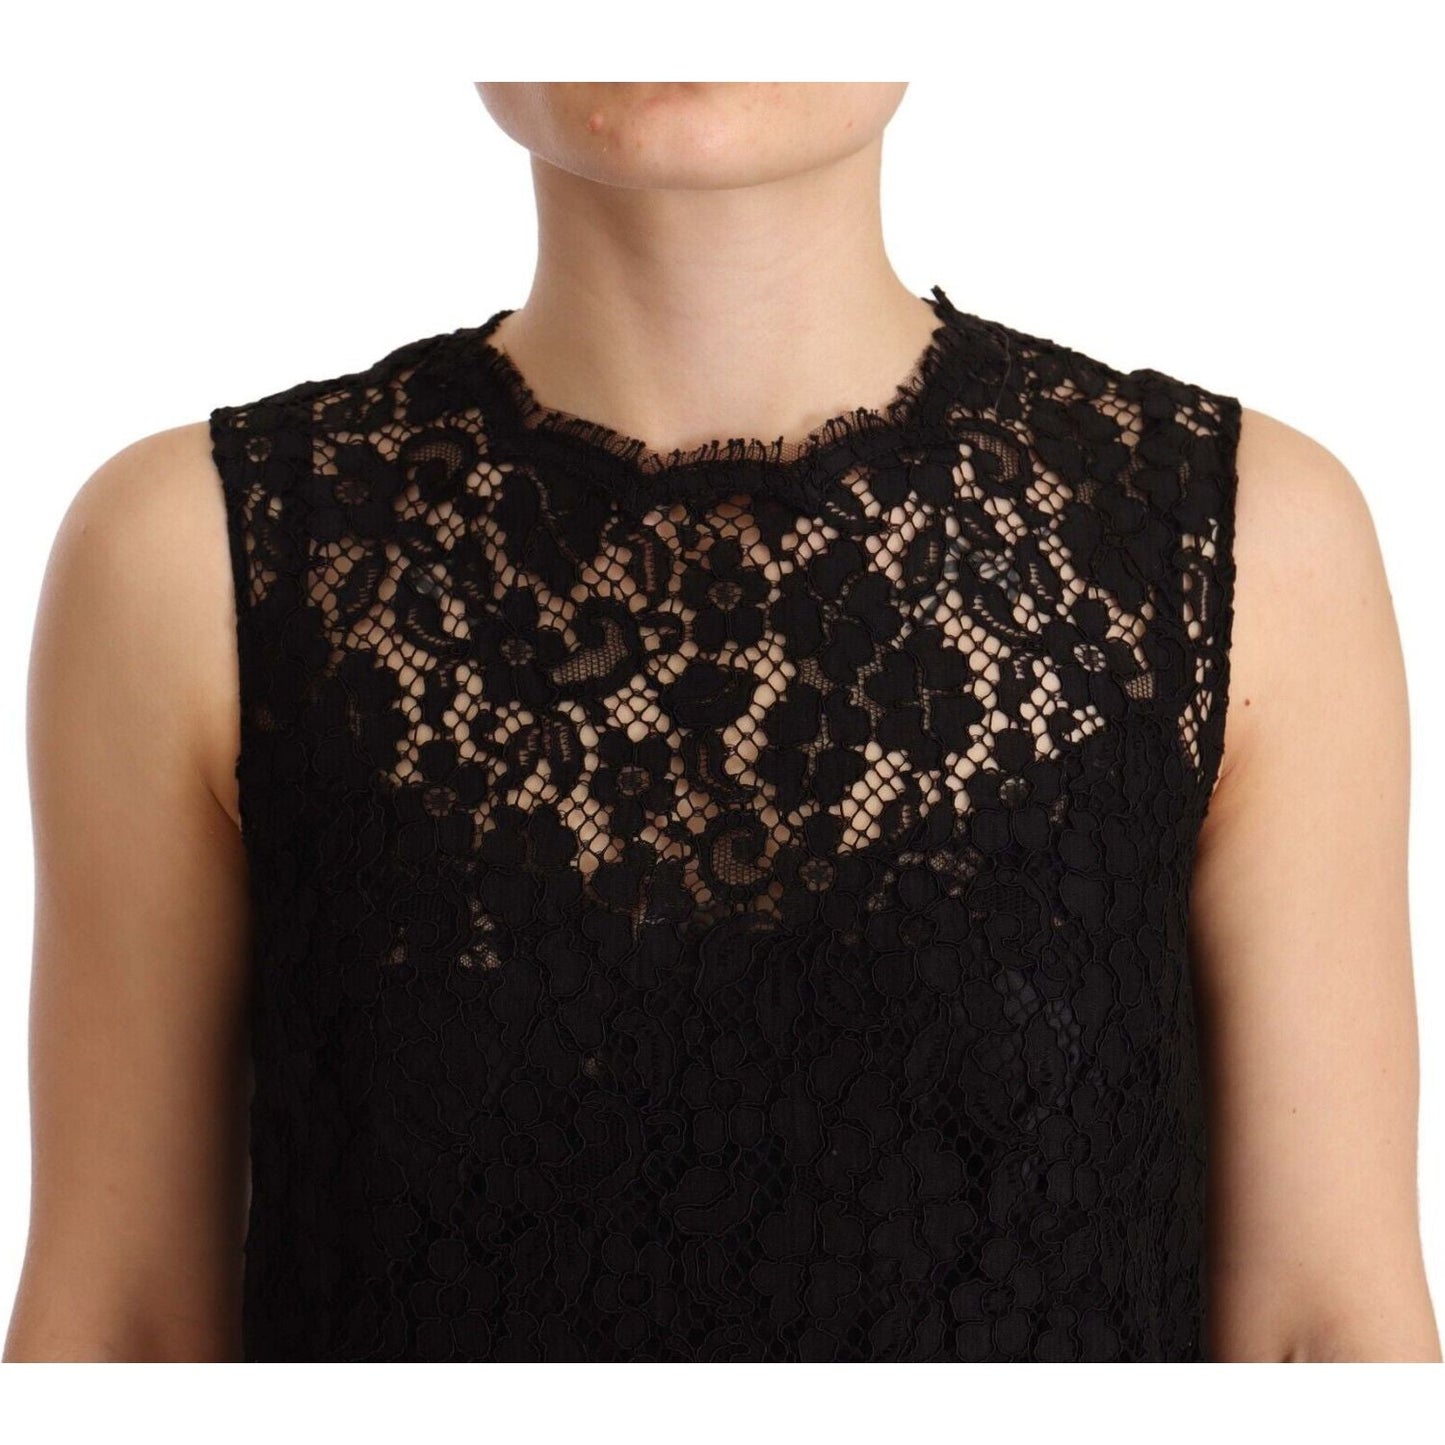 Dolce & GabbanaElegant Floral Lace Sheath Dress in BlackMcRichard Designer Brands£1139.00